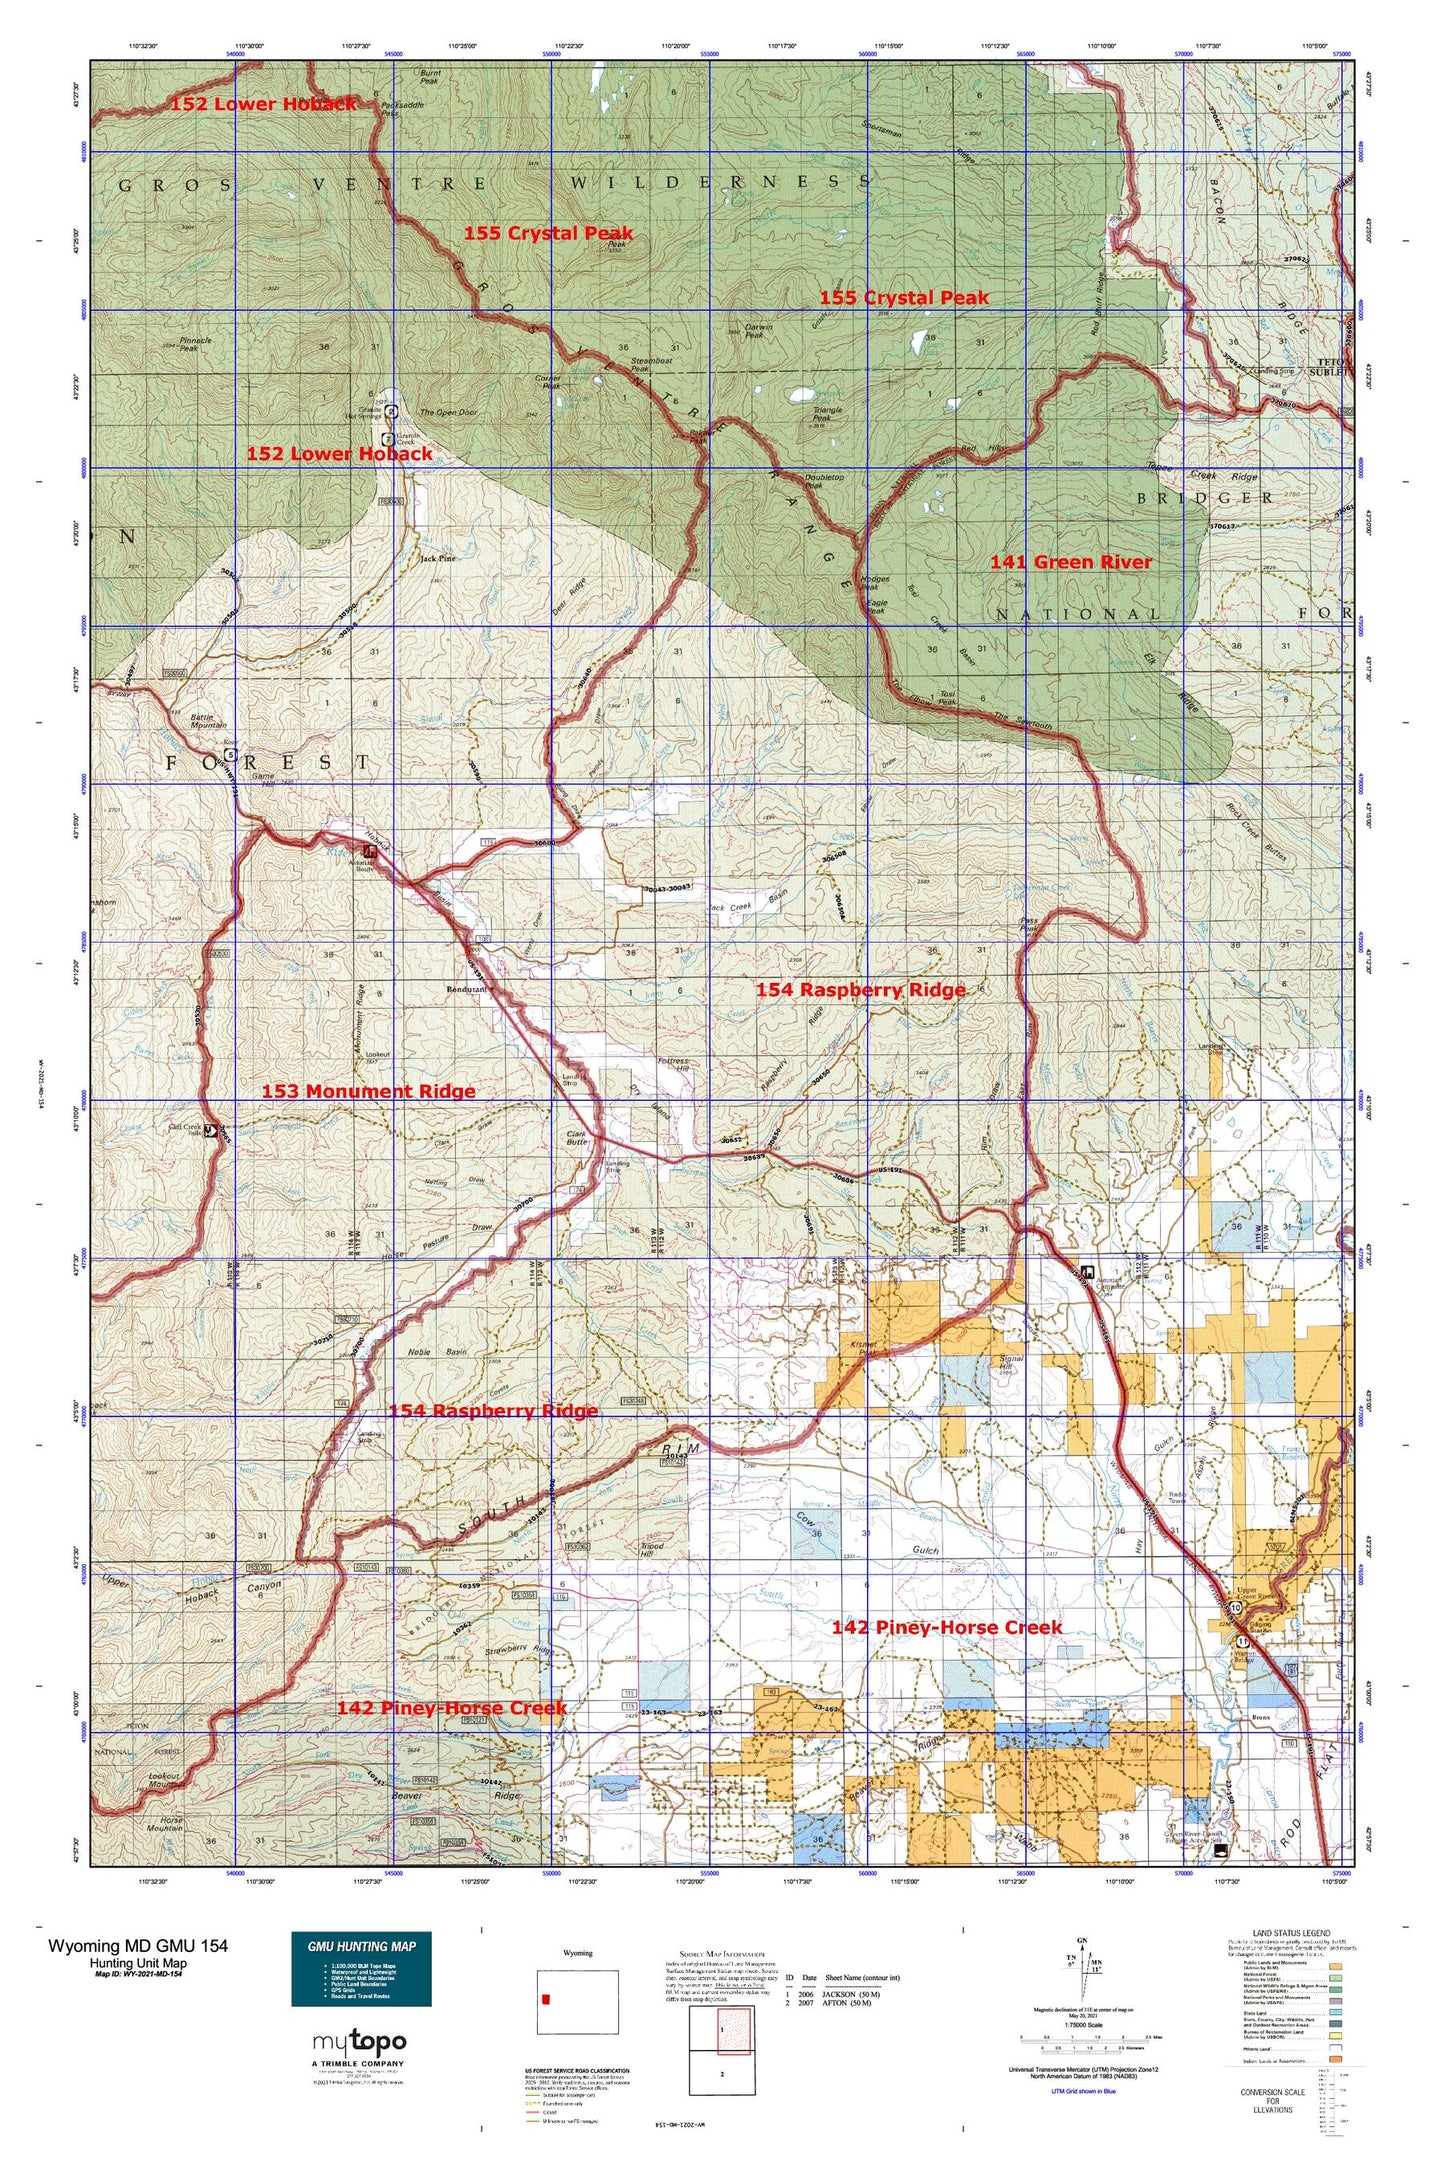 Wyoming Mule Deer GMU 154 Map Image